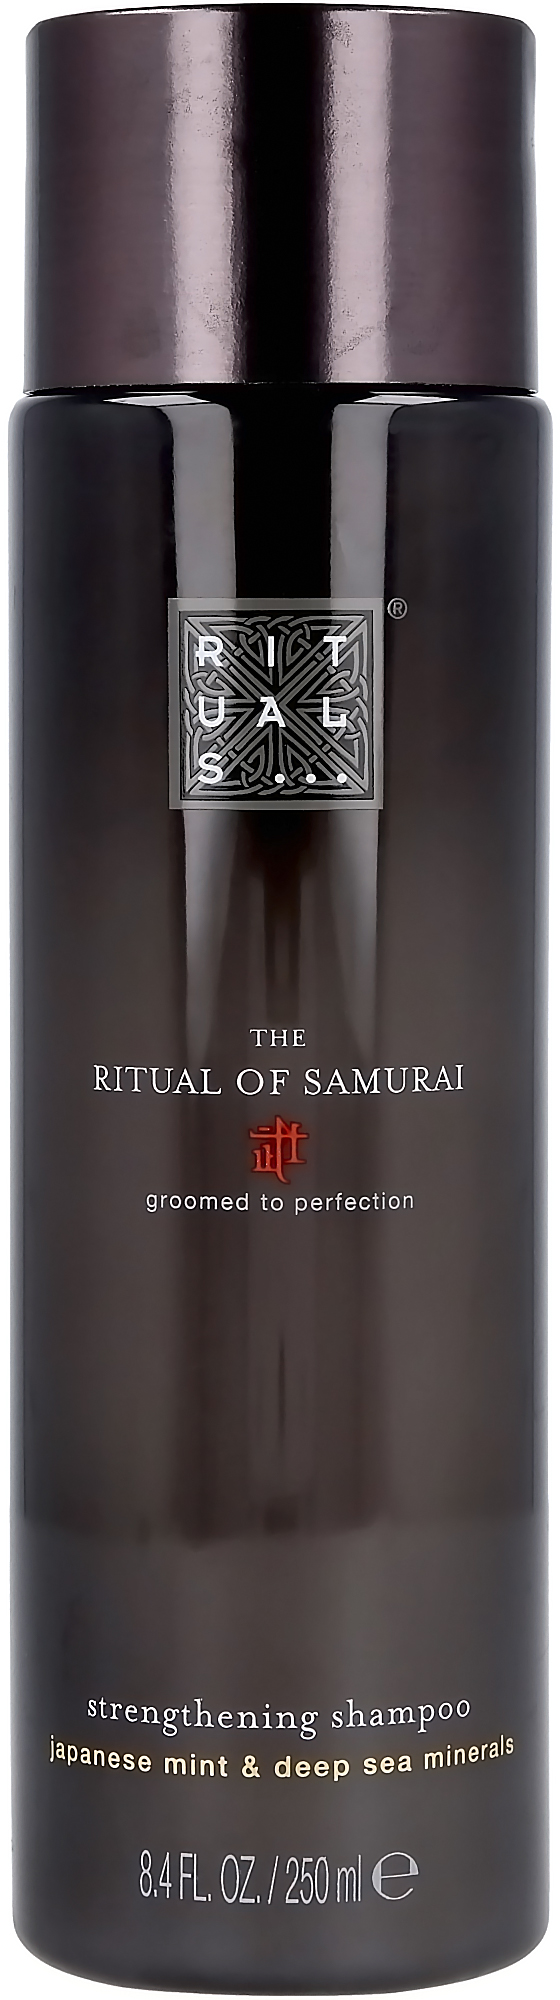 Composition RITUALS The ritual of Samurai - Streingthening shampoo